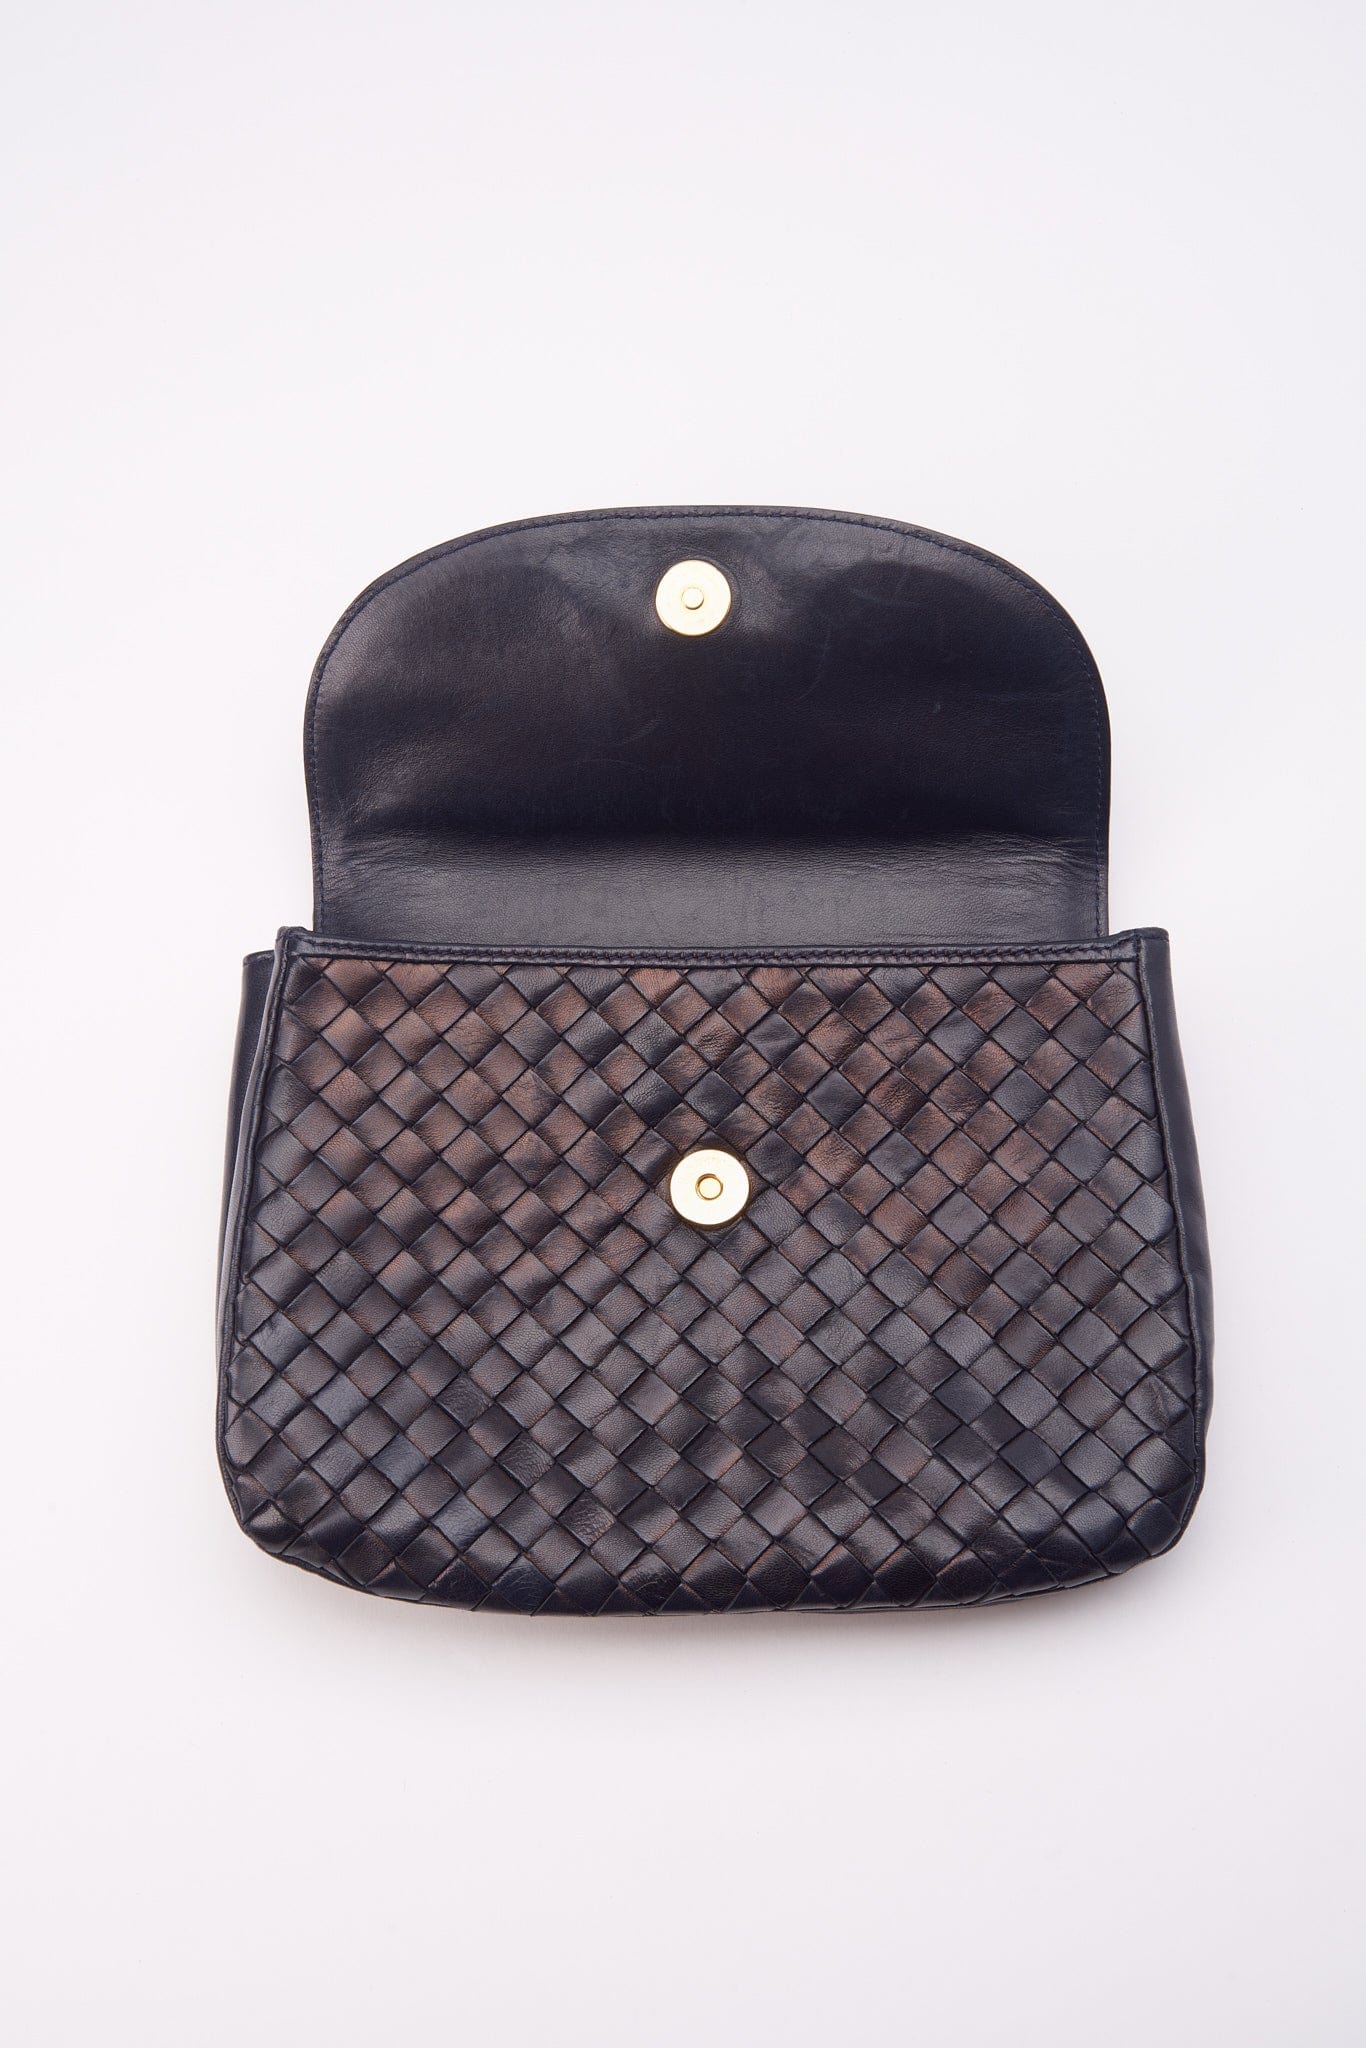 Vintage Bottega Veneta Intrecciato Navy Leather Top Handle Bag